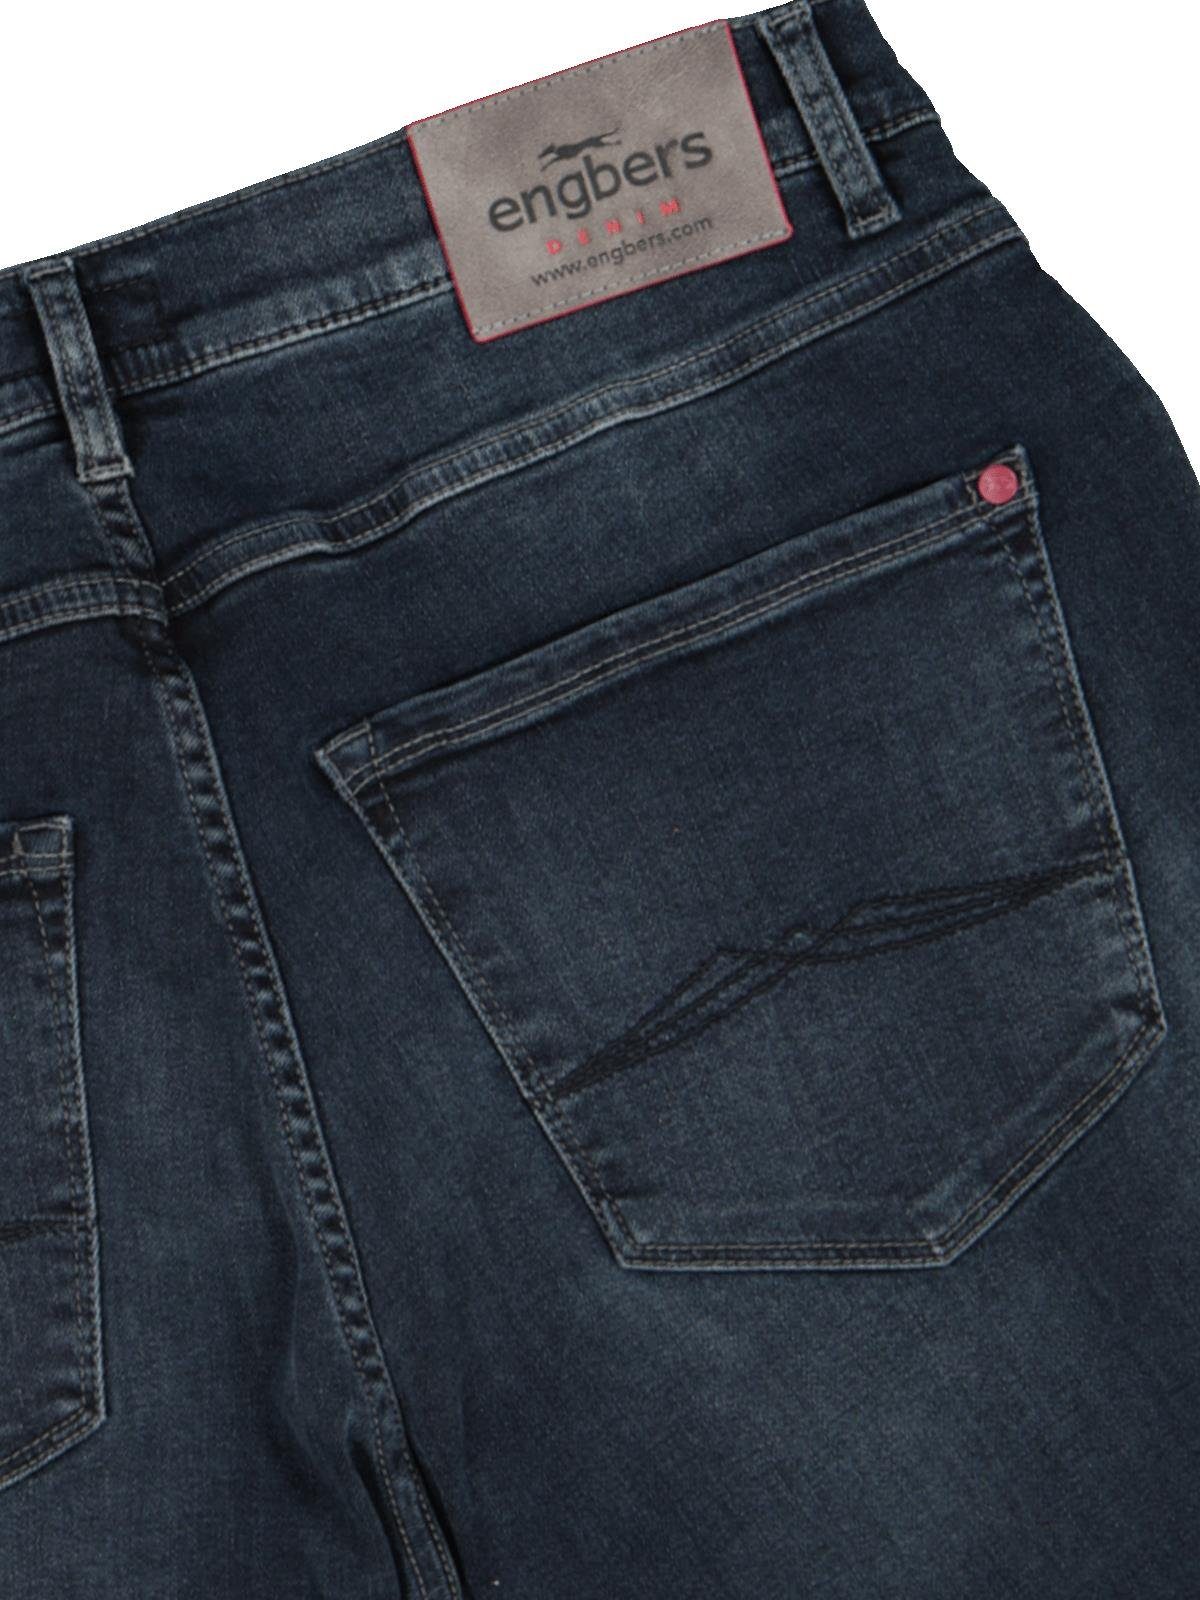 slim Engbers Jeans fit 5-Pocket-Jeans